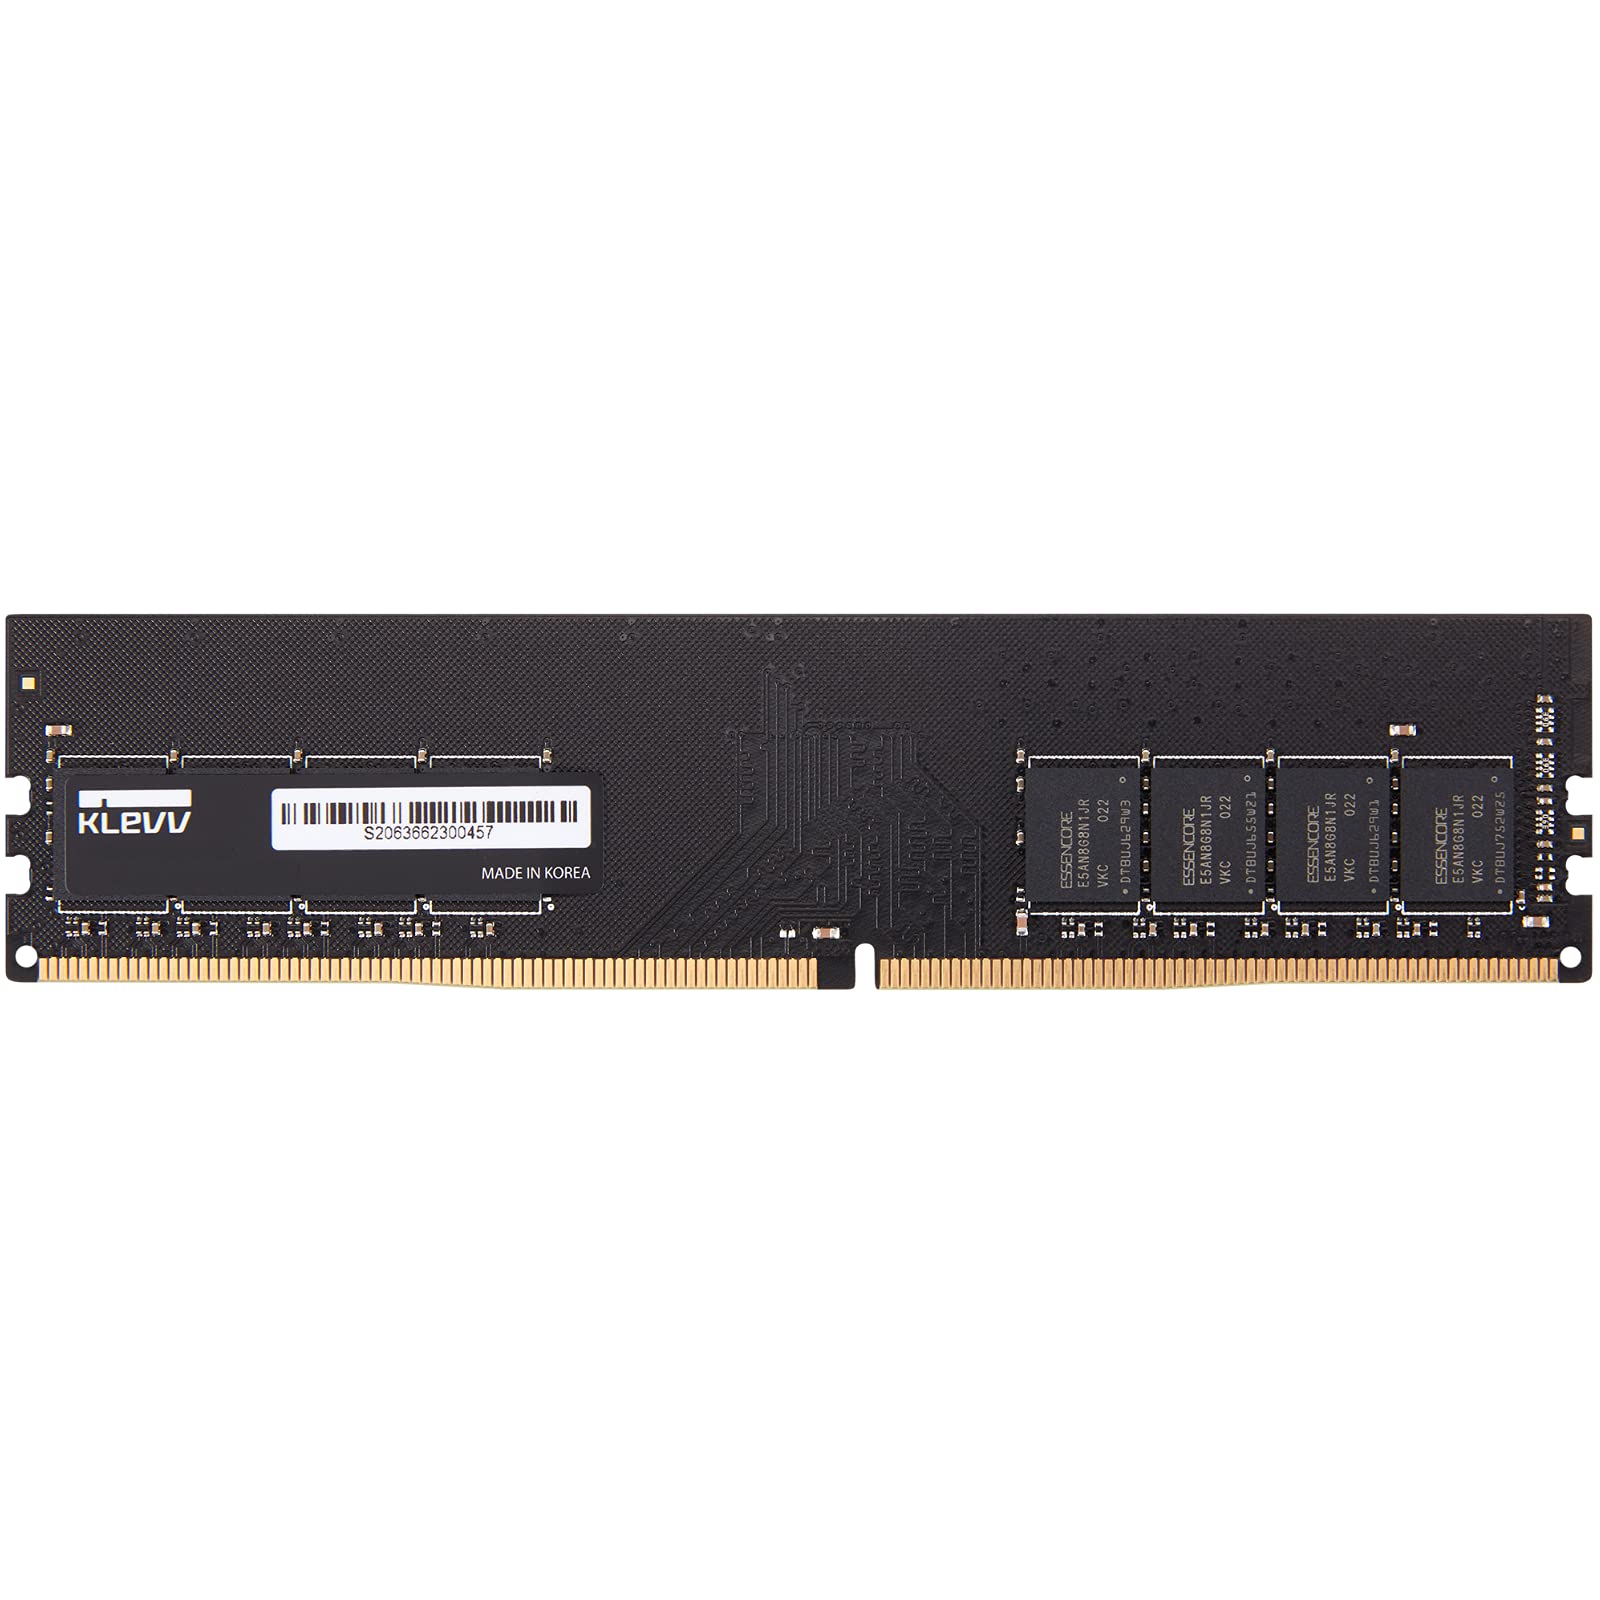 KLEVV Desktop Ram Memory DDR4 16GB 1x16GB 3200MHz CL22 1.2V UDIMM SK Hynix Chip KD4AGUA80-32N220A